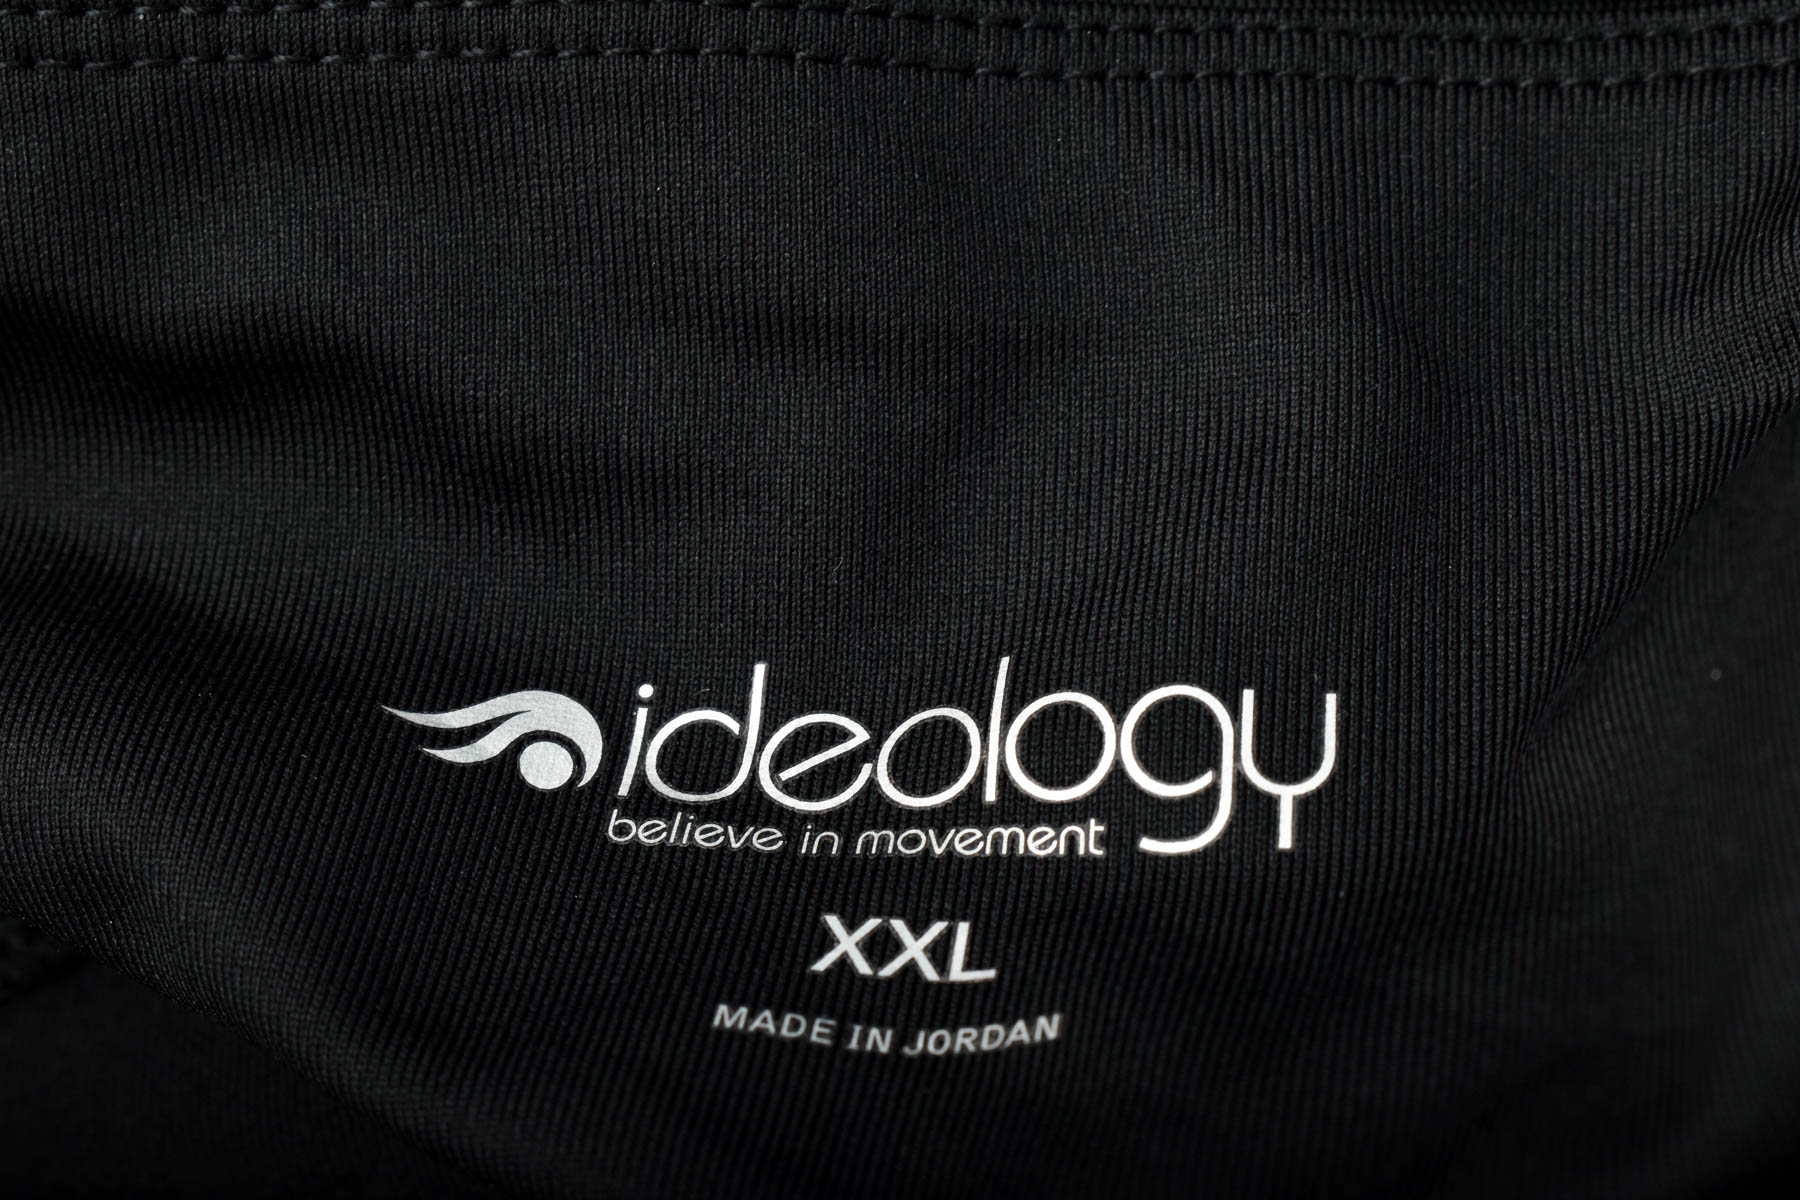 Leggings - Ideology - 2